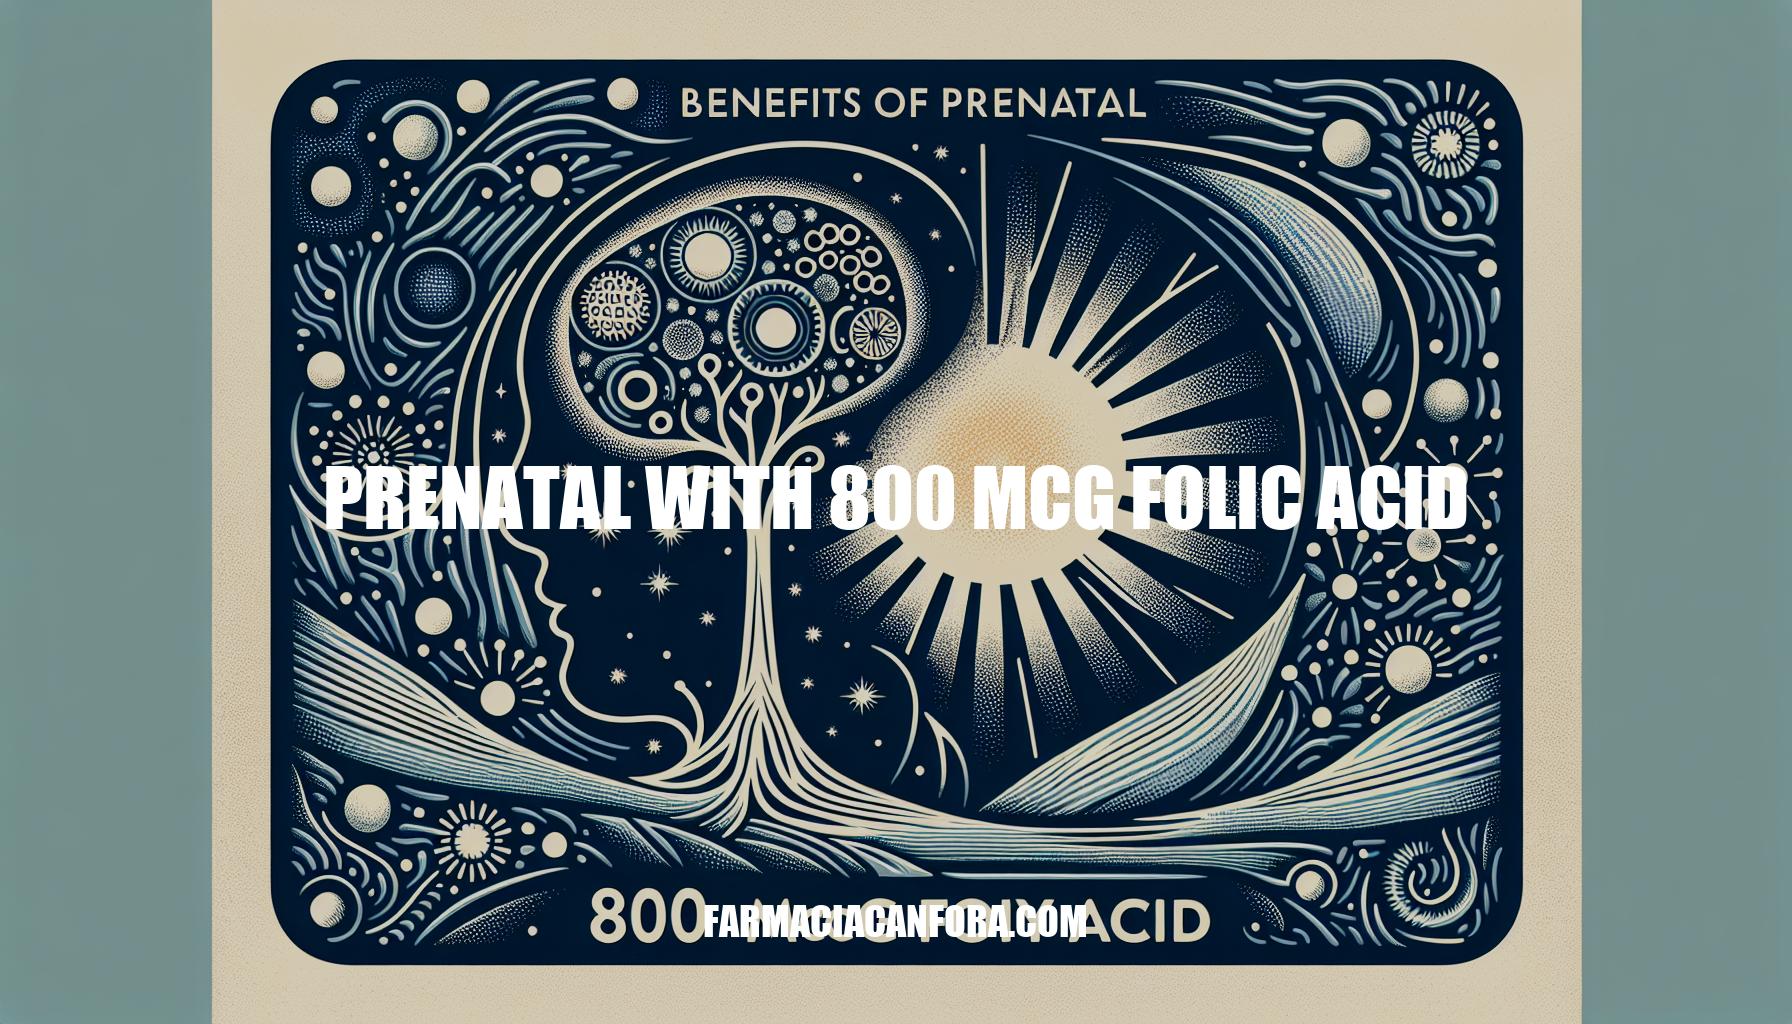 Benefits of Prenatal Vitamins with 800 mcg Folic Acid